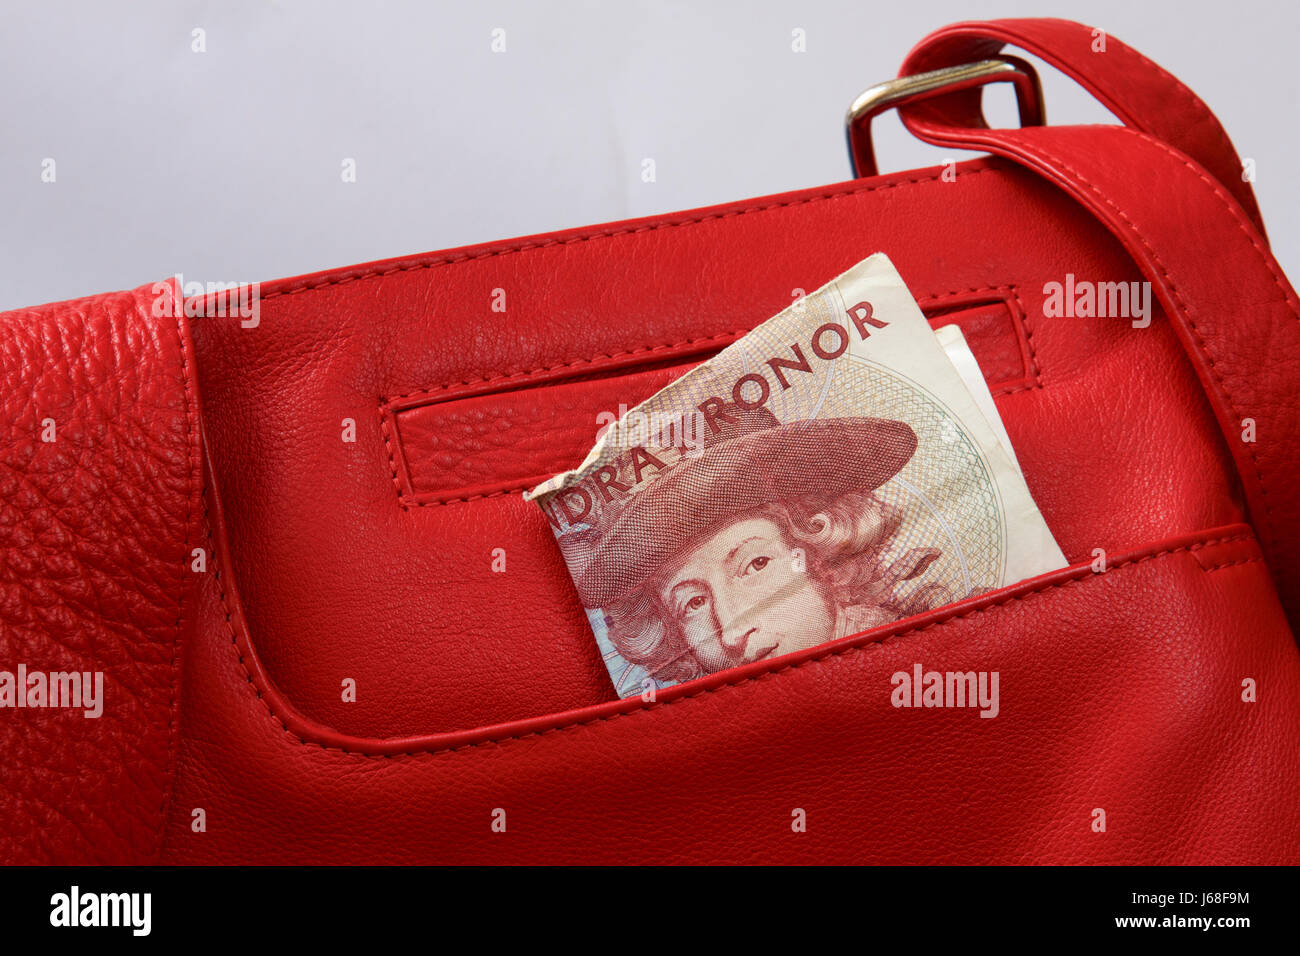 Swedish money in a shopping bag. Stock Photo